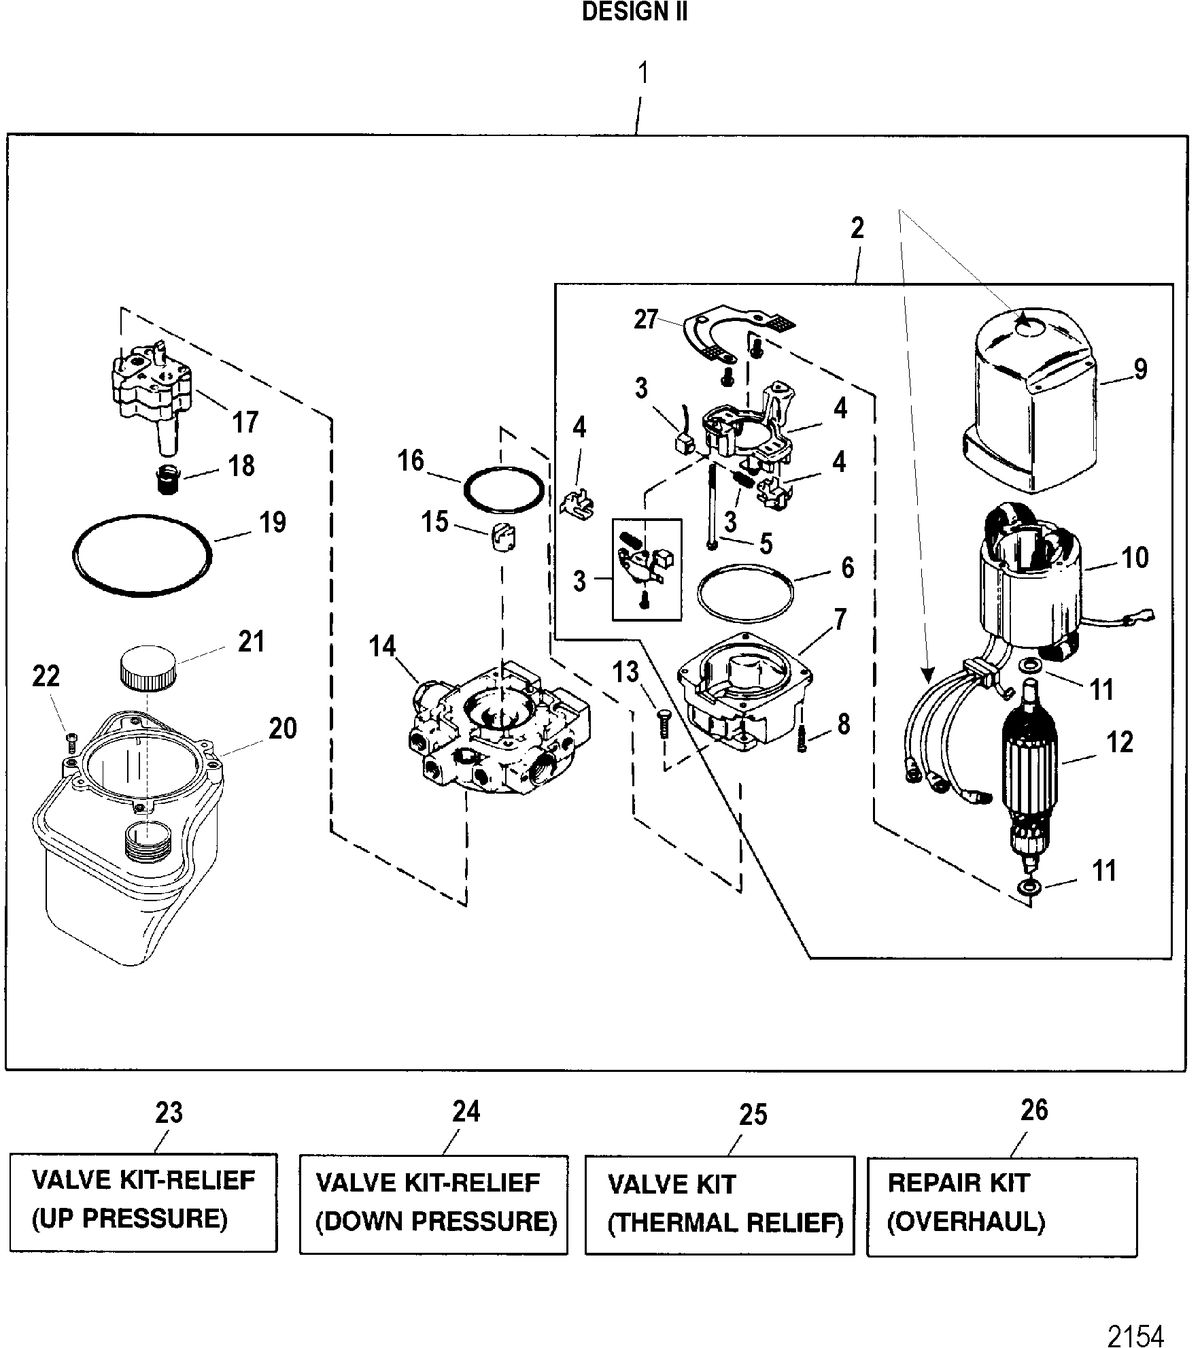 RACE STERNDRIVE SCORPION 377 STERNDRIVE Pump/Motor Assembly(Design II - 14336A25)